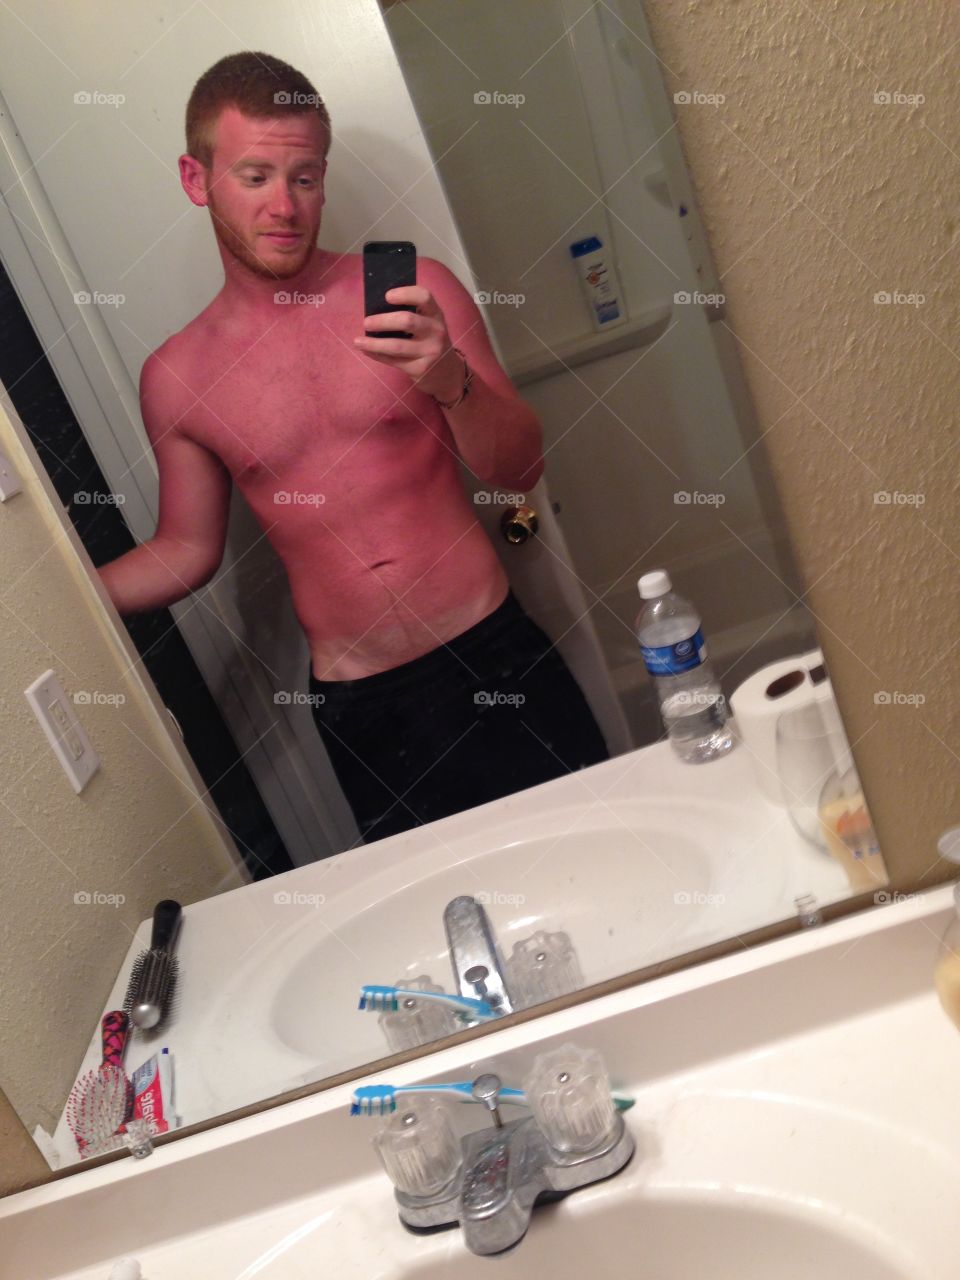 Shoulda put on sunscreen!